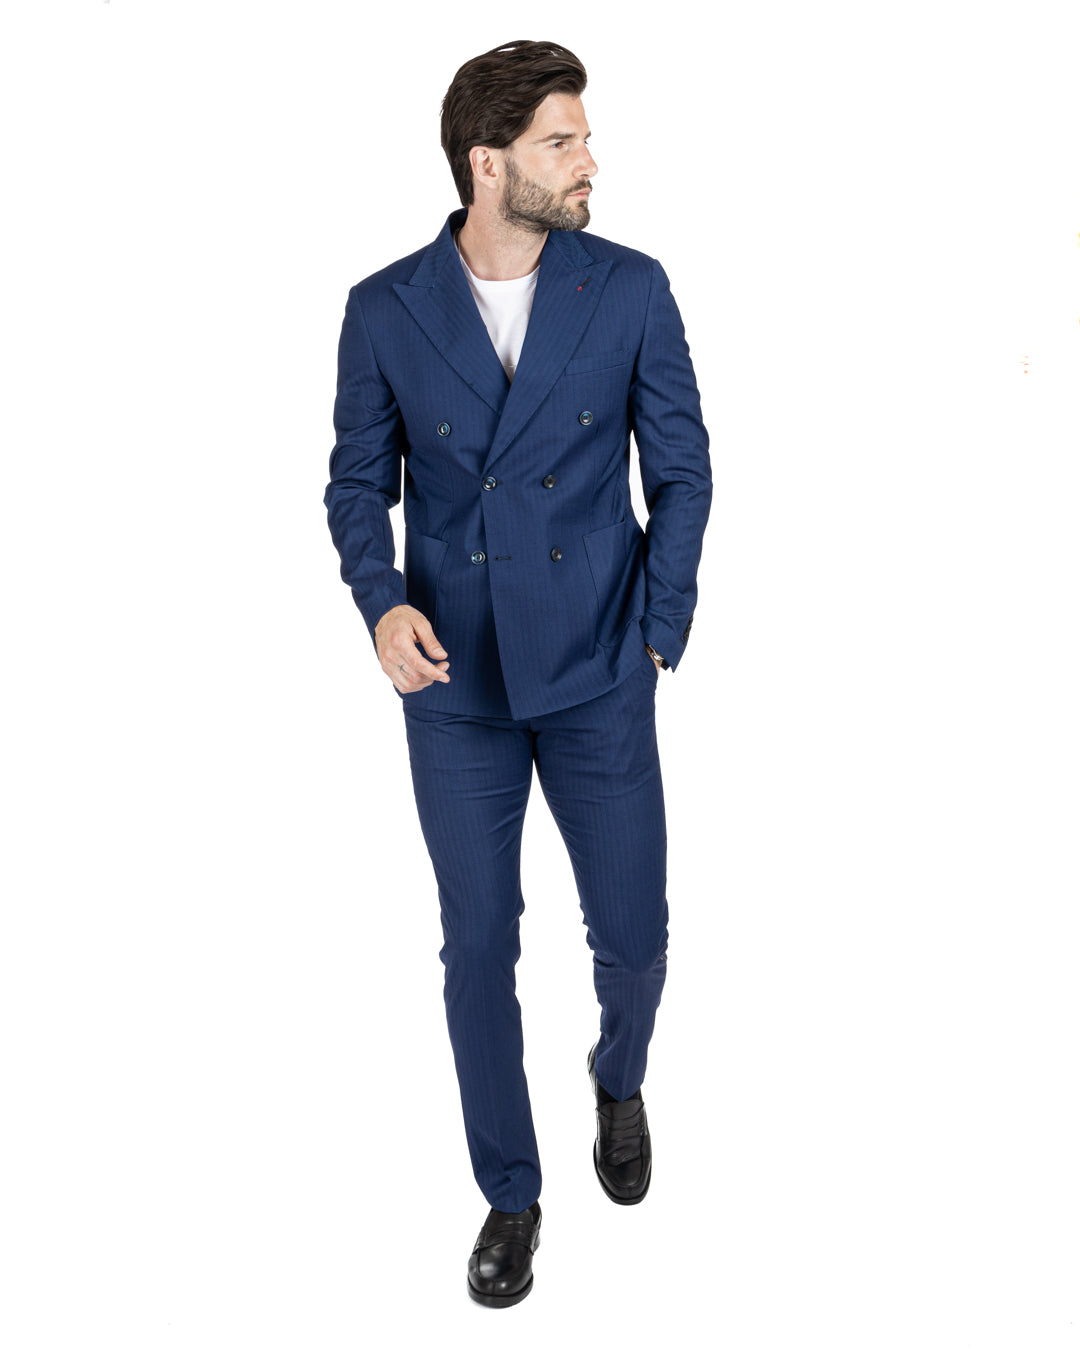 Marseille - bluette solaro double-breasted suit